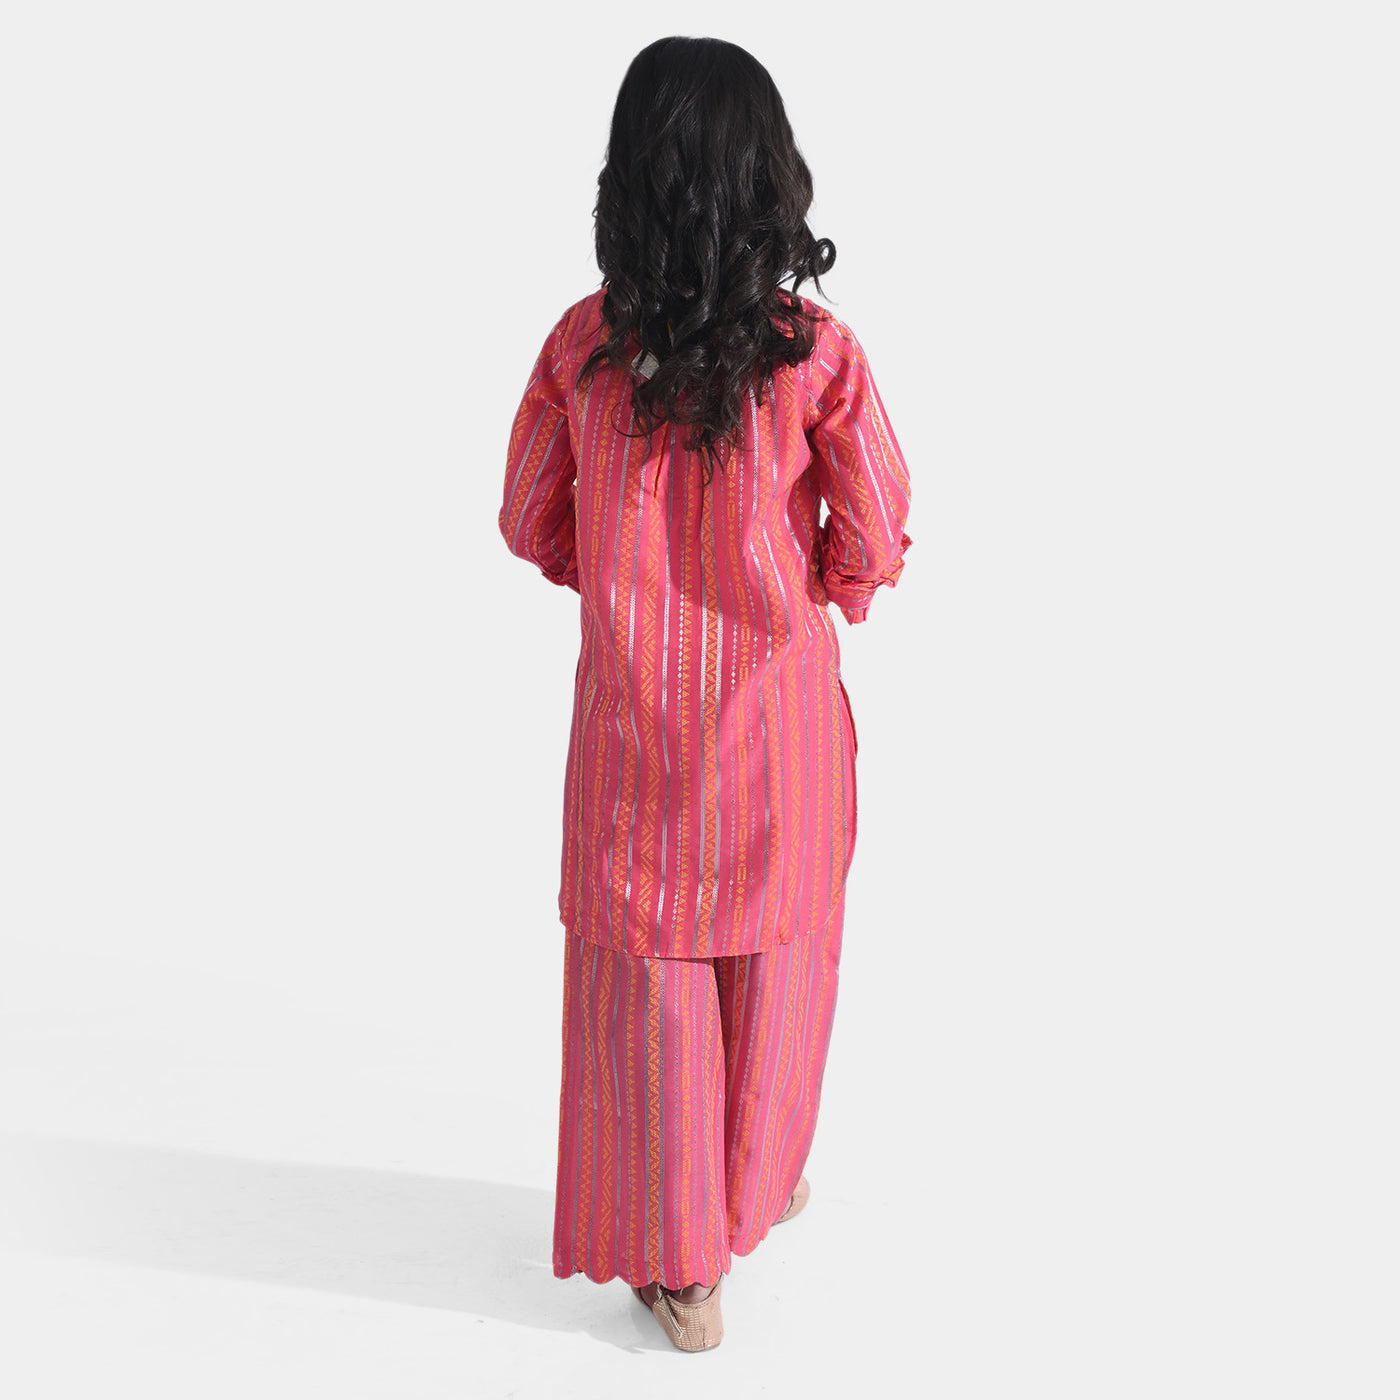 Girls Jacquard 2PCs Suit Stripes-P. Pink